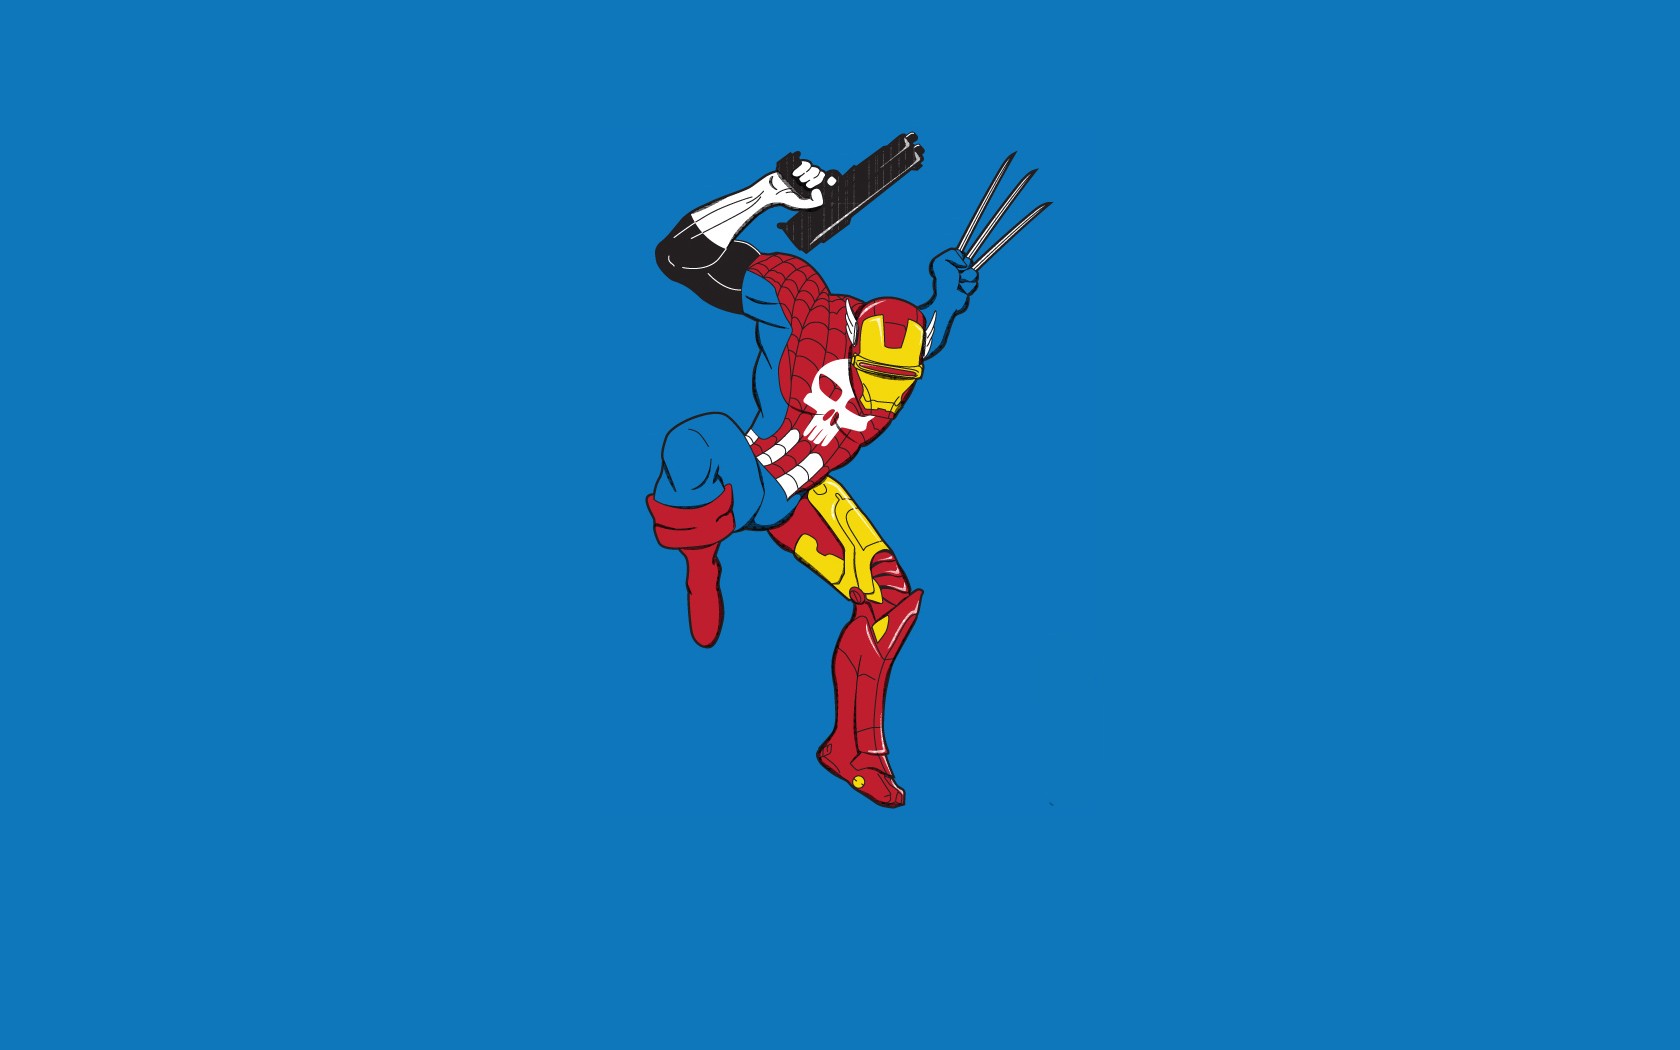 47+] Minimalist Superhero Wallpaper - WallpaperSafari